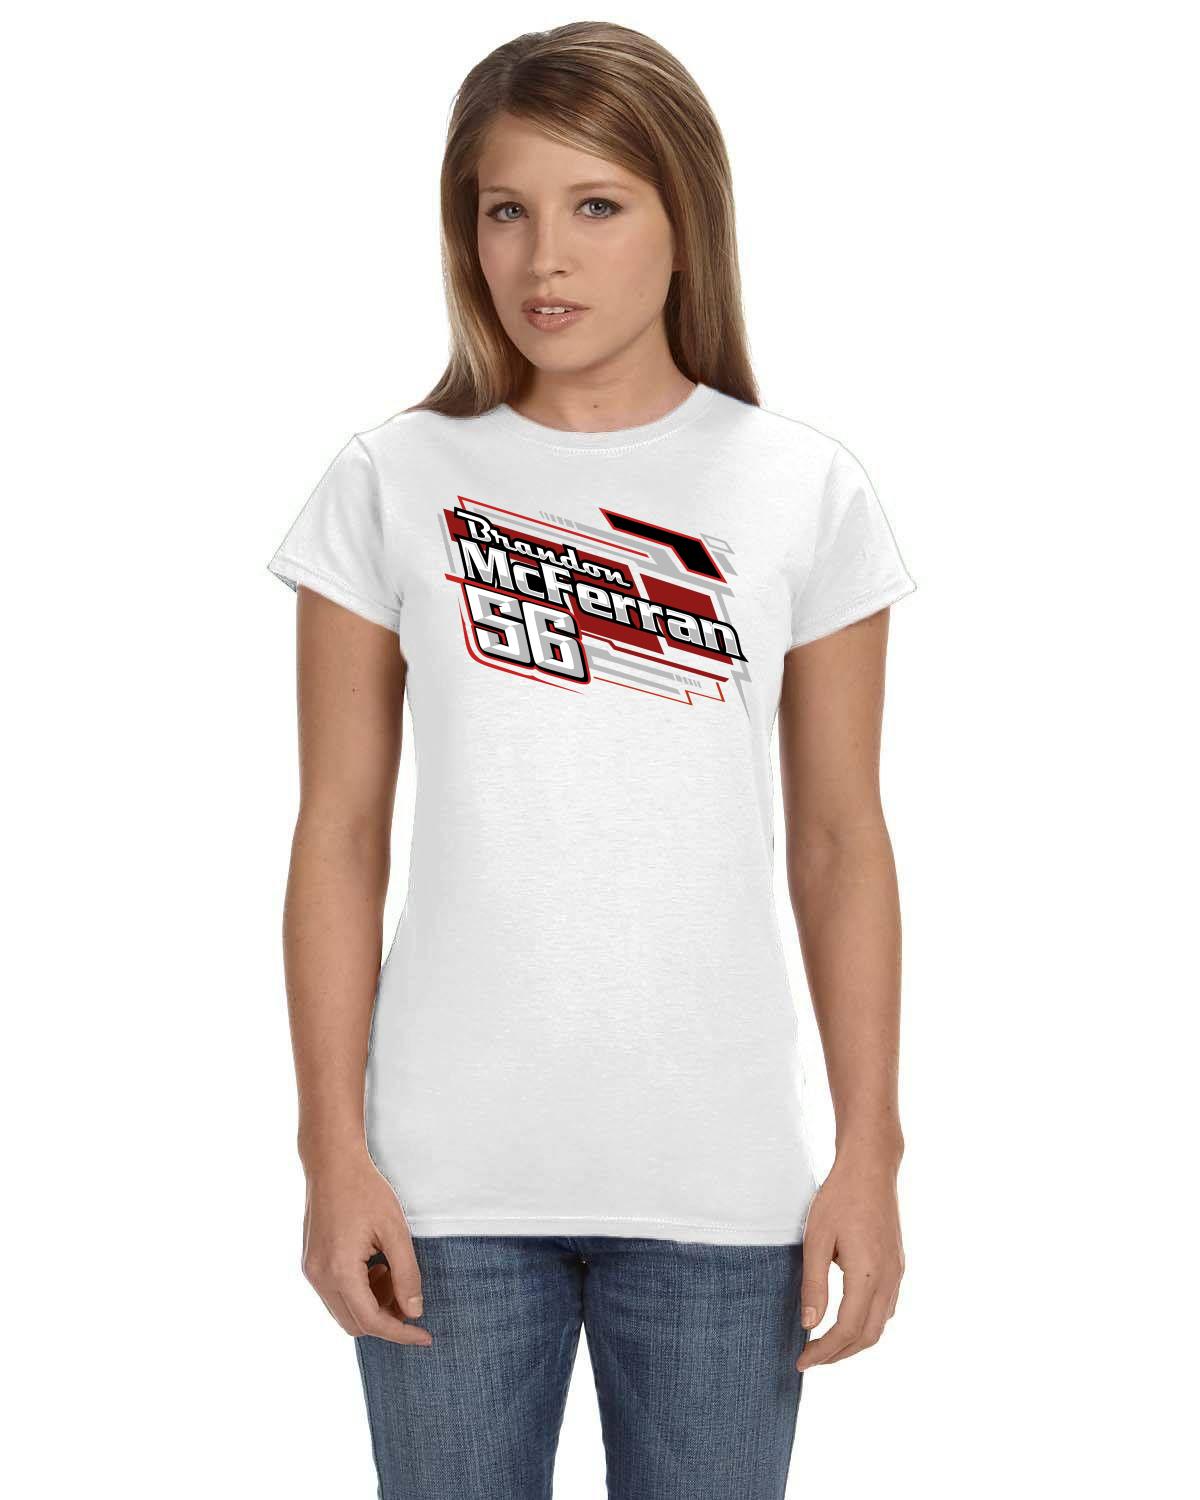 Brandon McFerran Racing Ladies softstyle tshirt